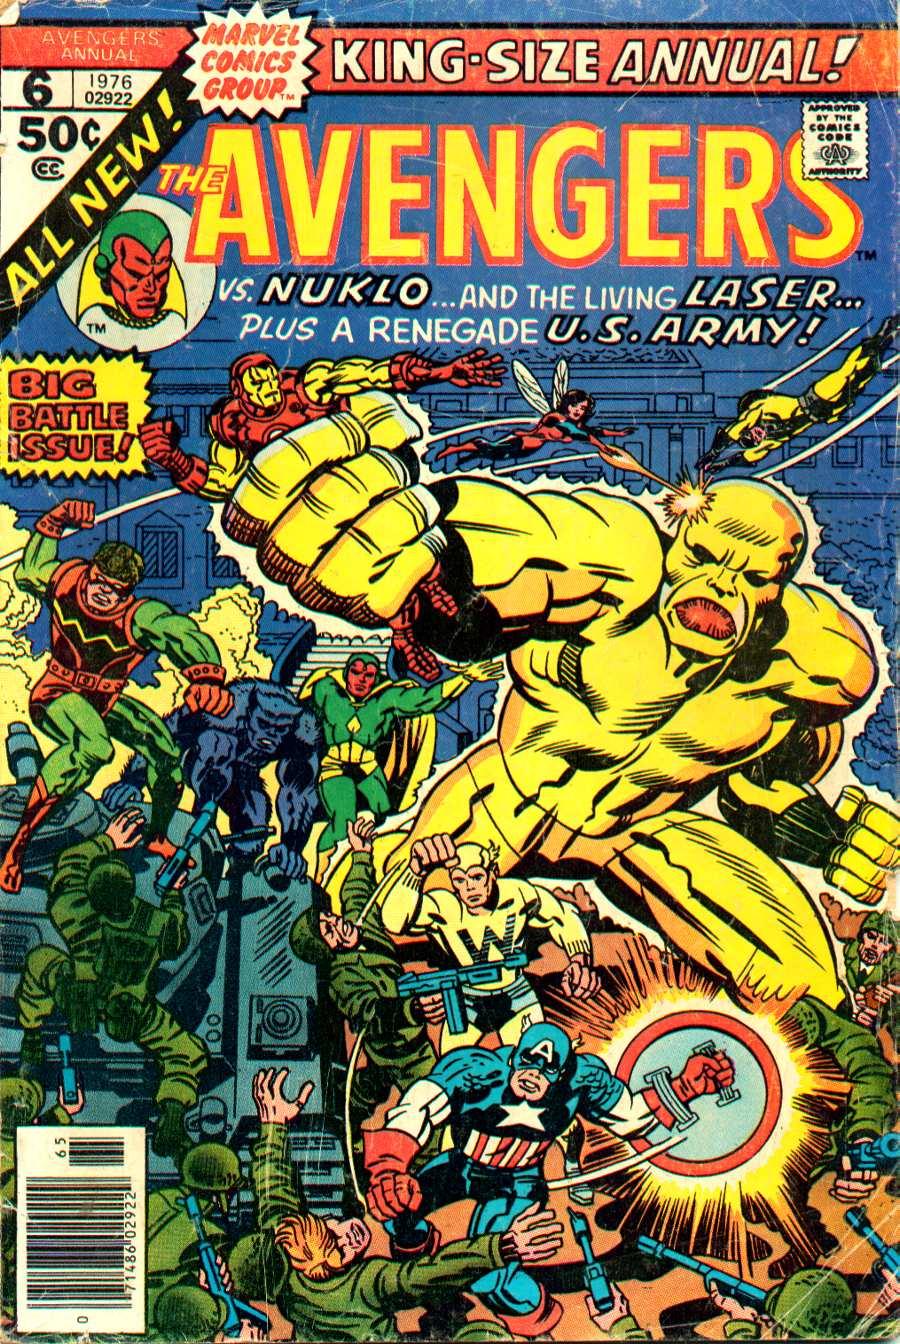 The Avengers Vol. 1 #6